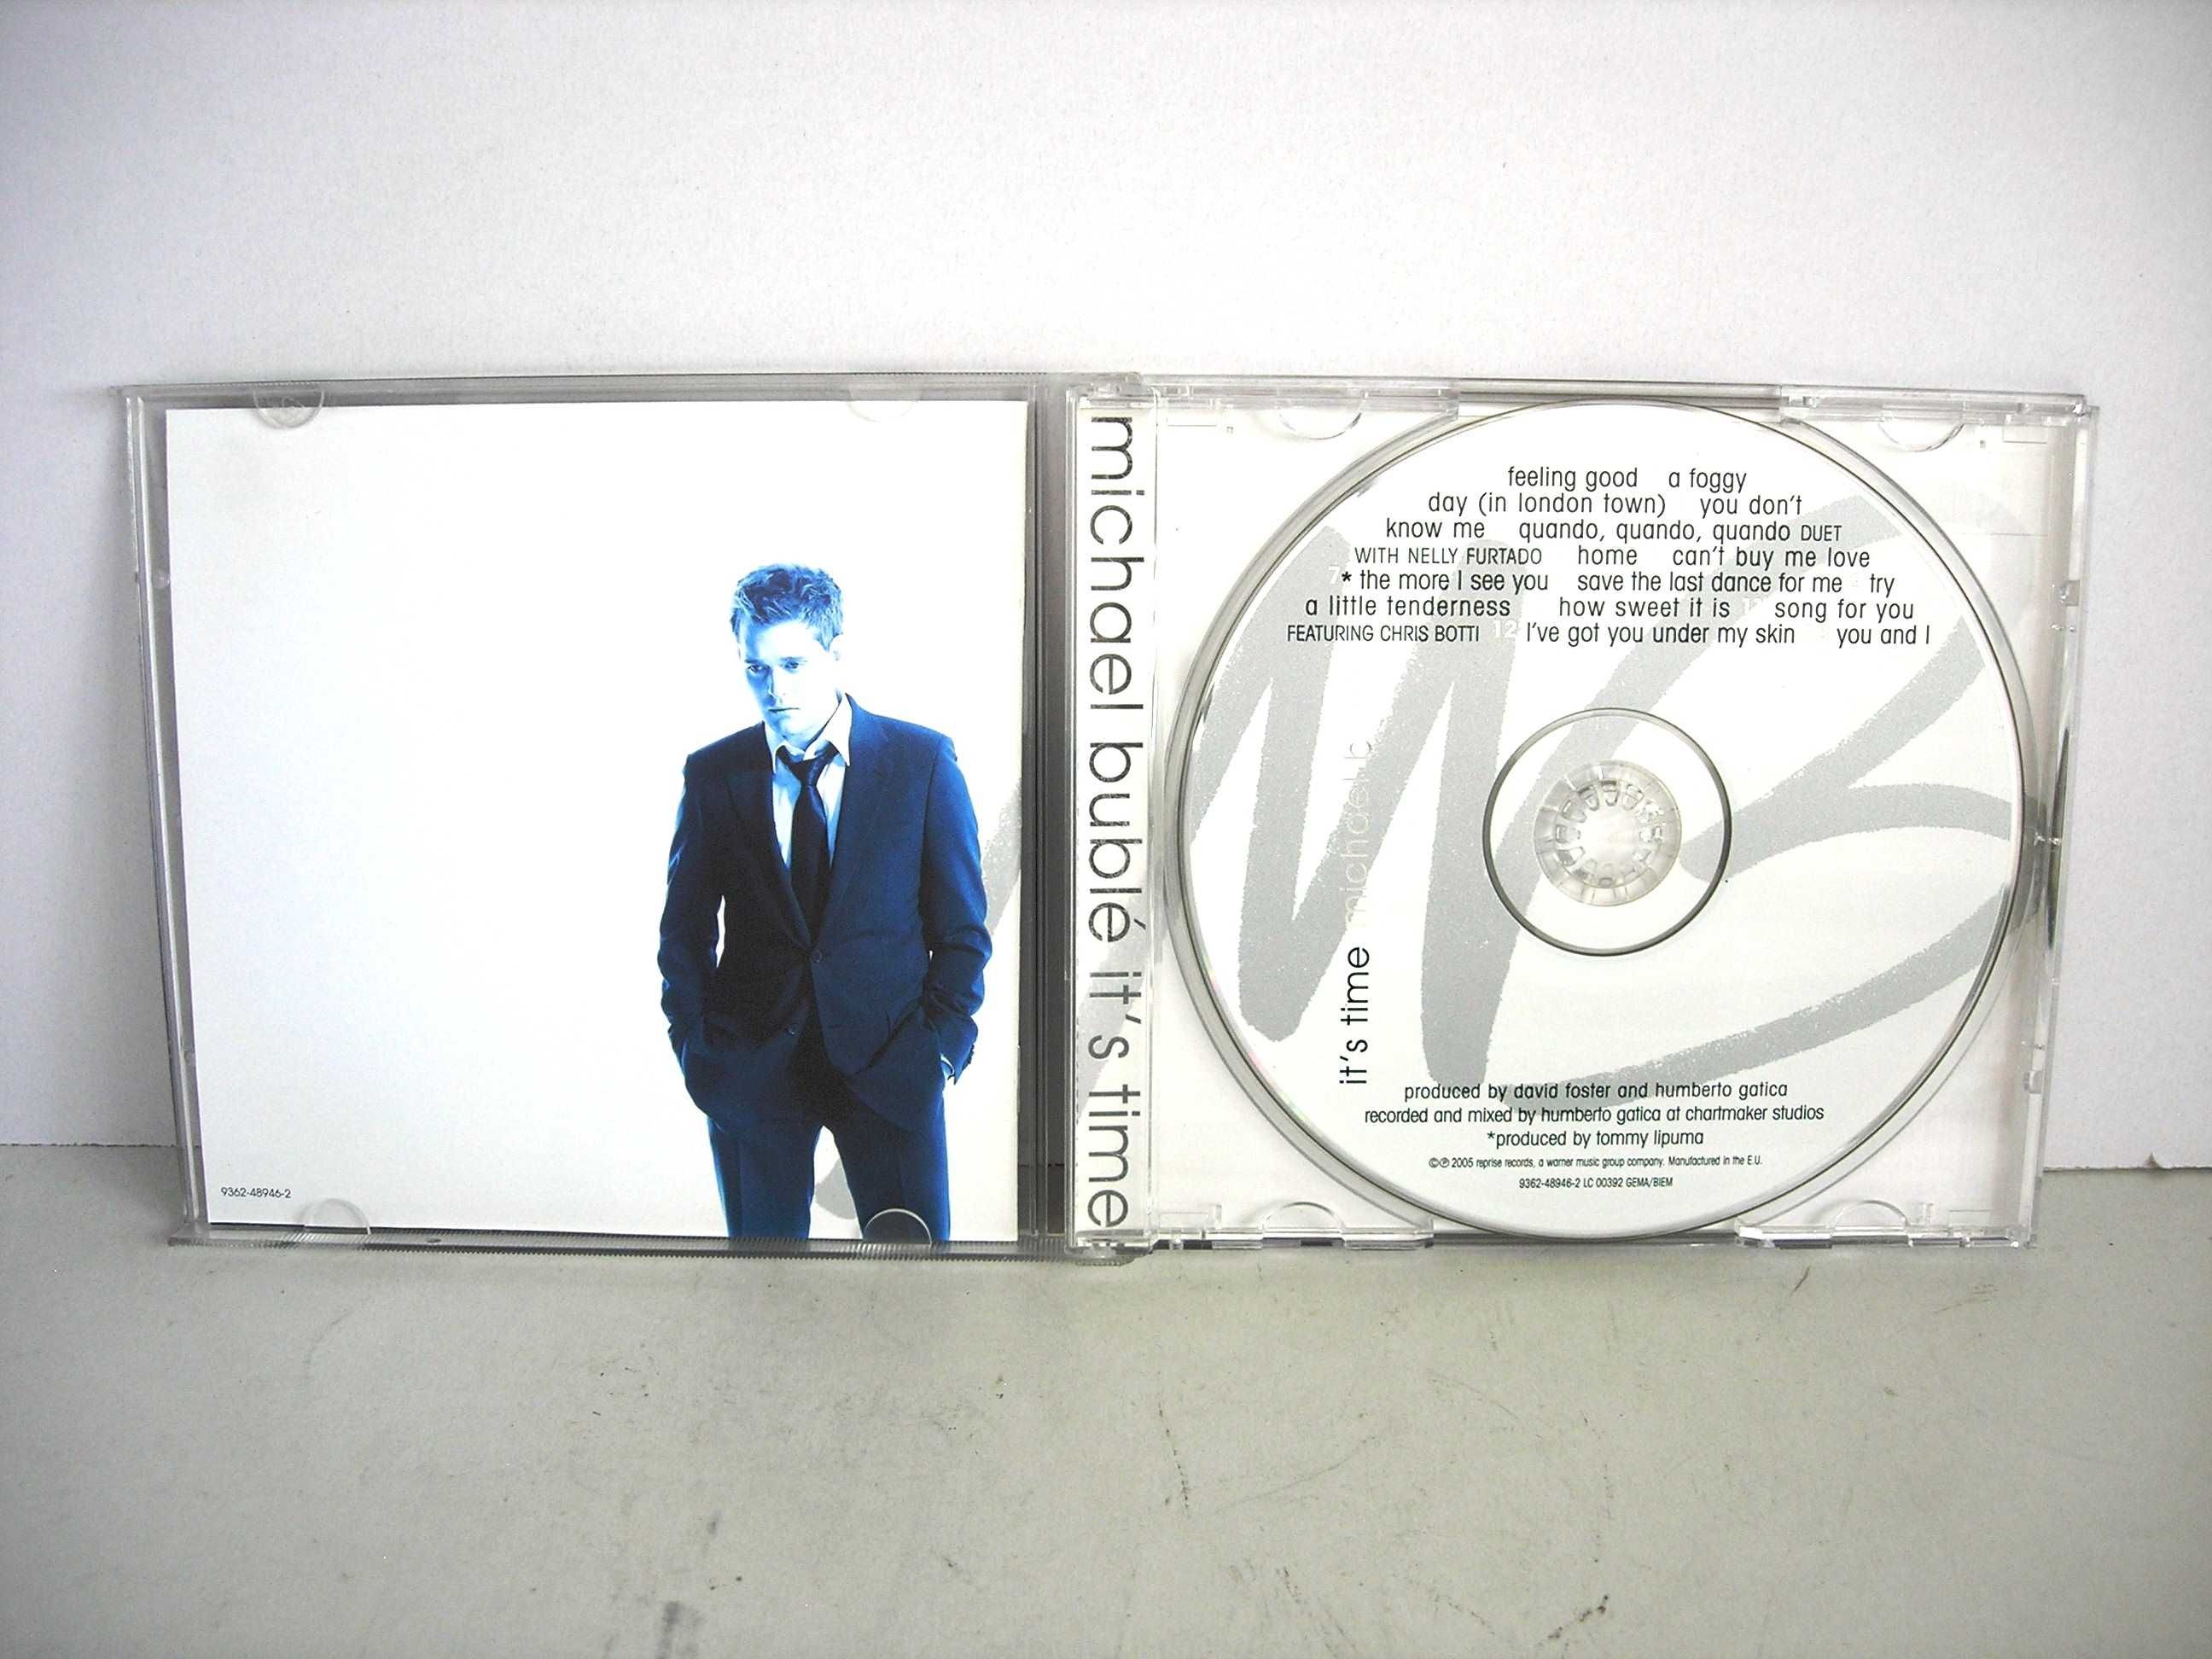 Michael Buble "It's time" płyta CD Warner Music 2005